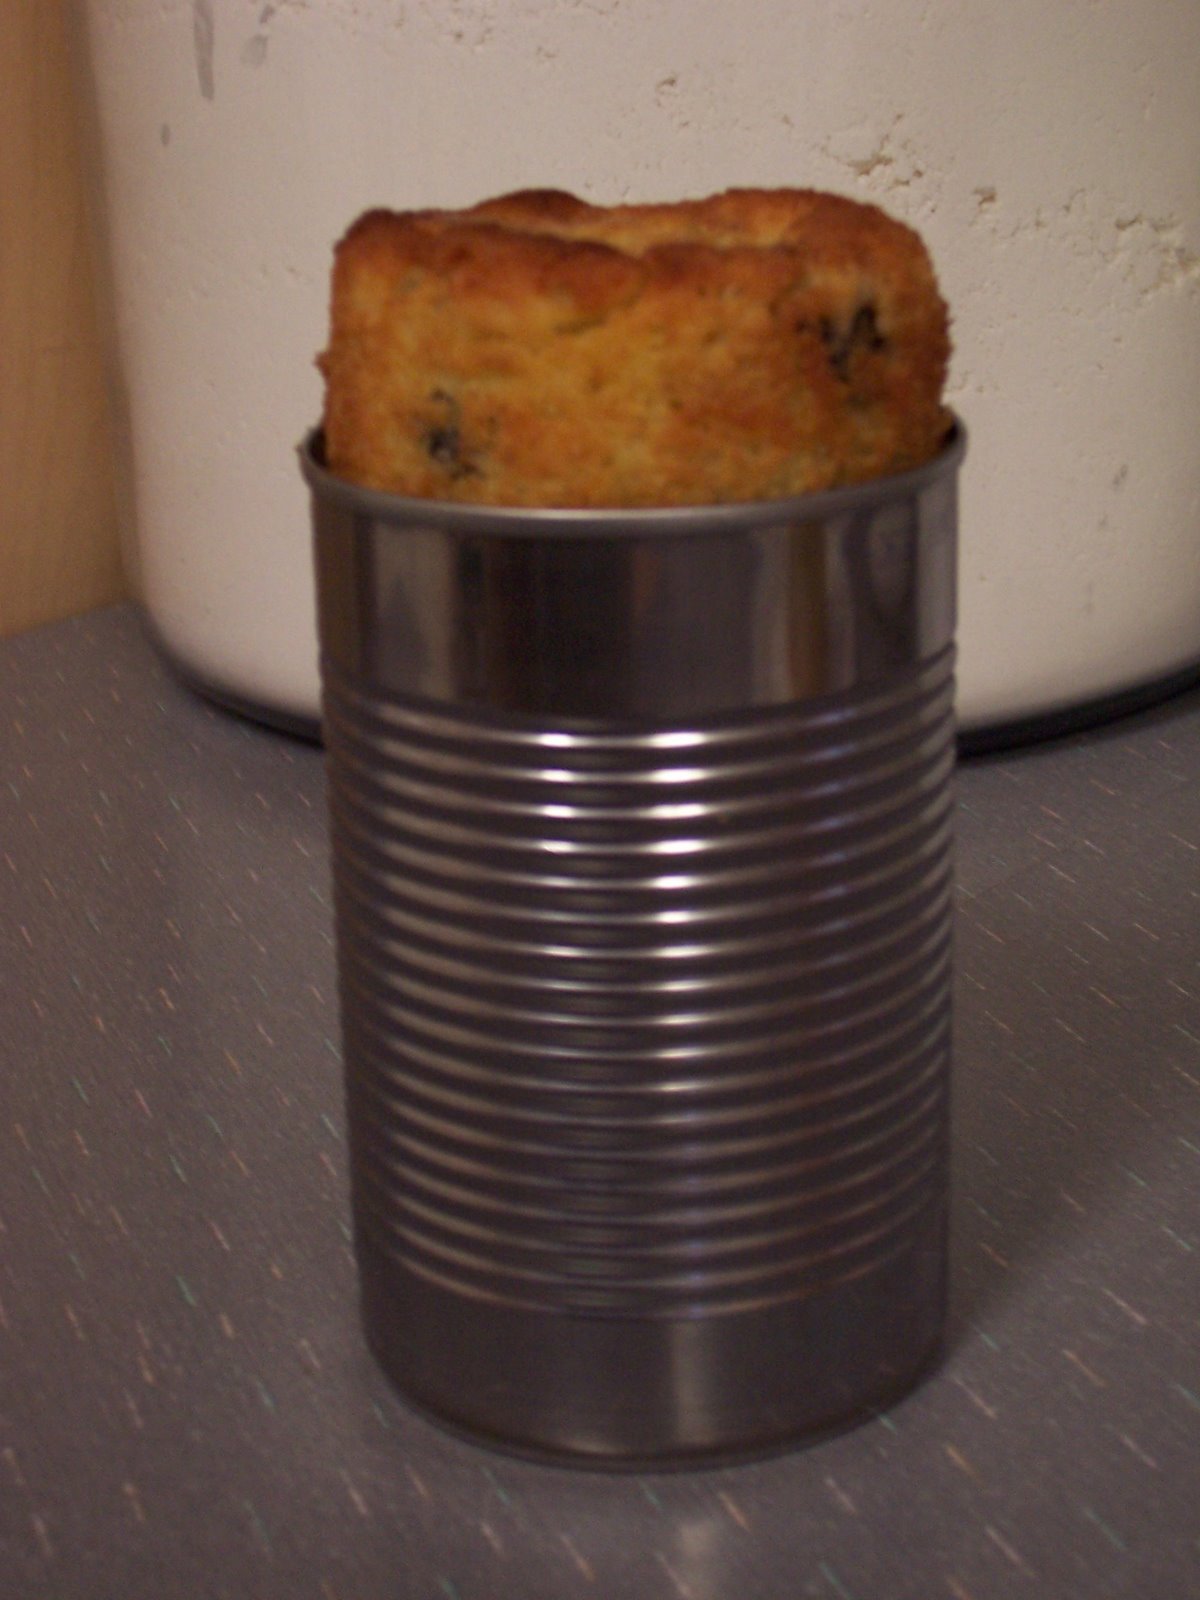 [Muffin+in+a+Can+003.jpg]